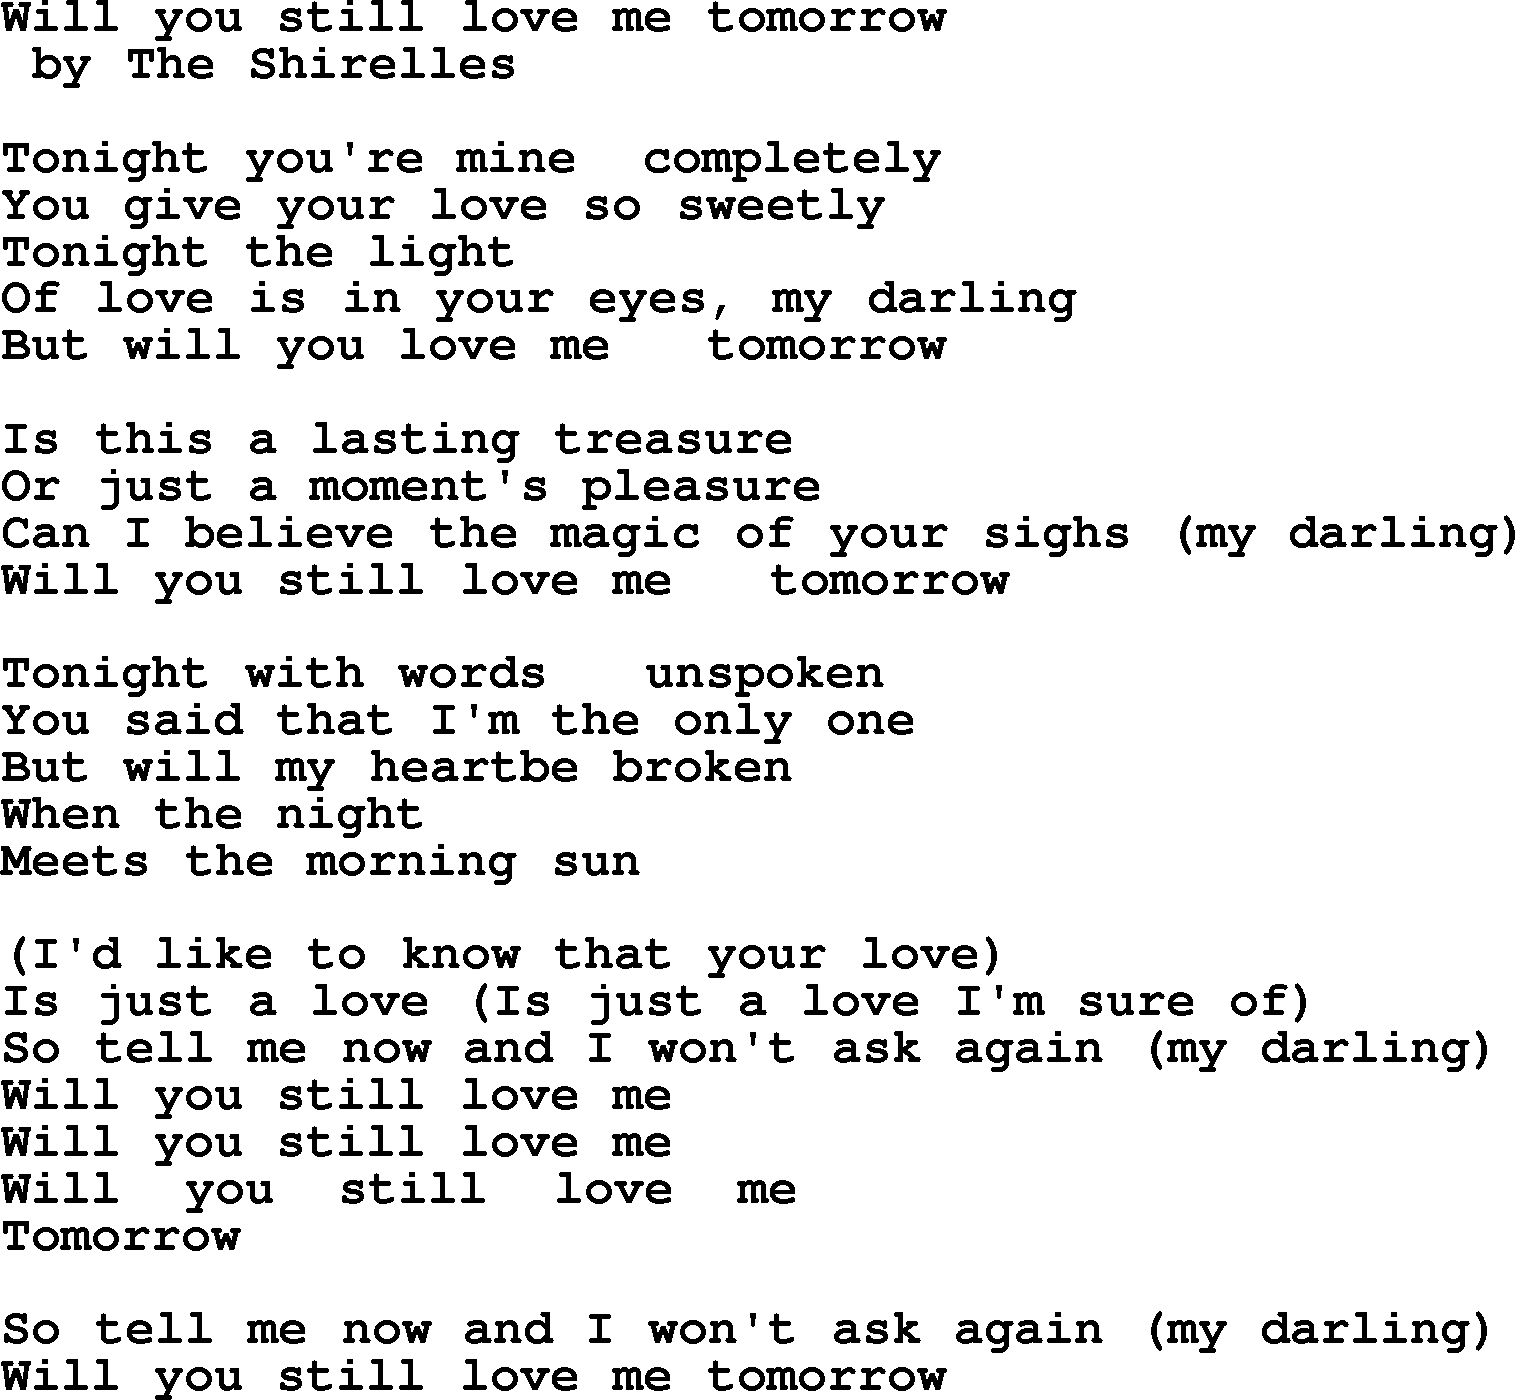 Bruce Springsteen song: Will You Still Love Me Tomorrow lyrics